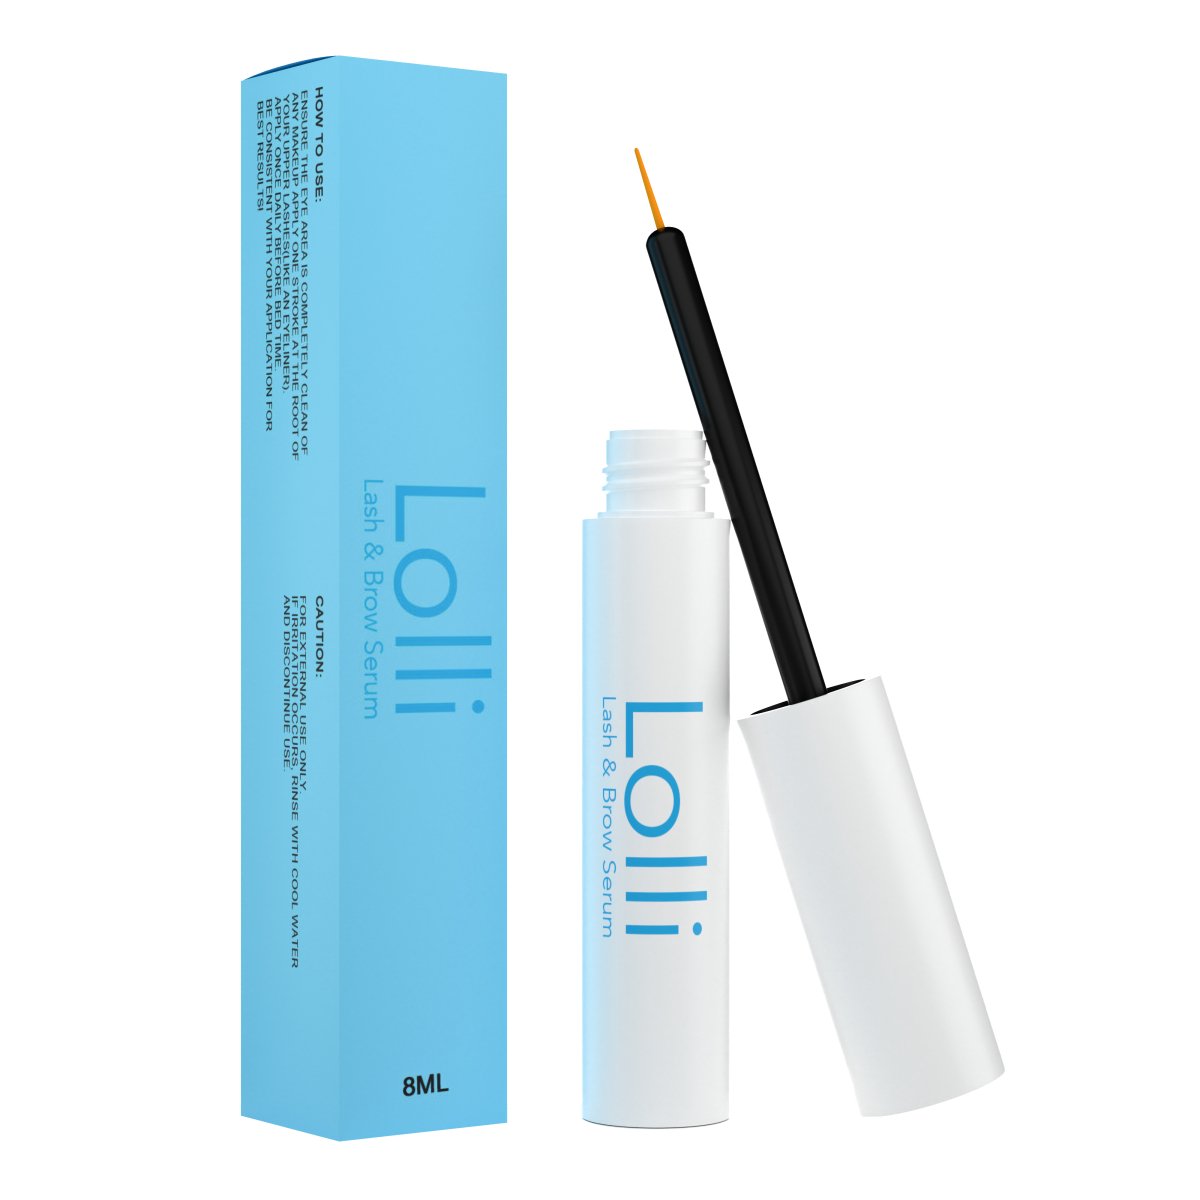 Lolli lash serum bottle, promoting longer, thicker lashes and brows – Eyelash Growth Serum